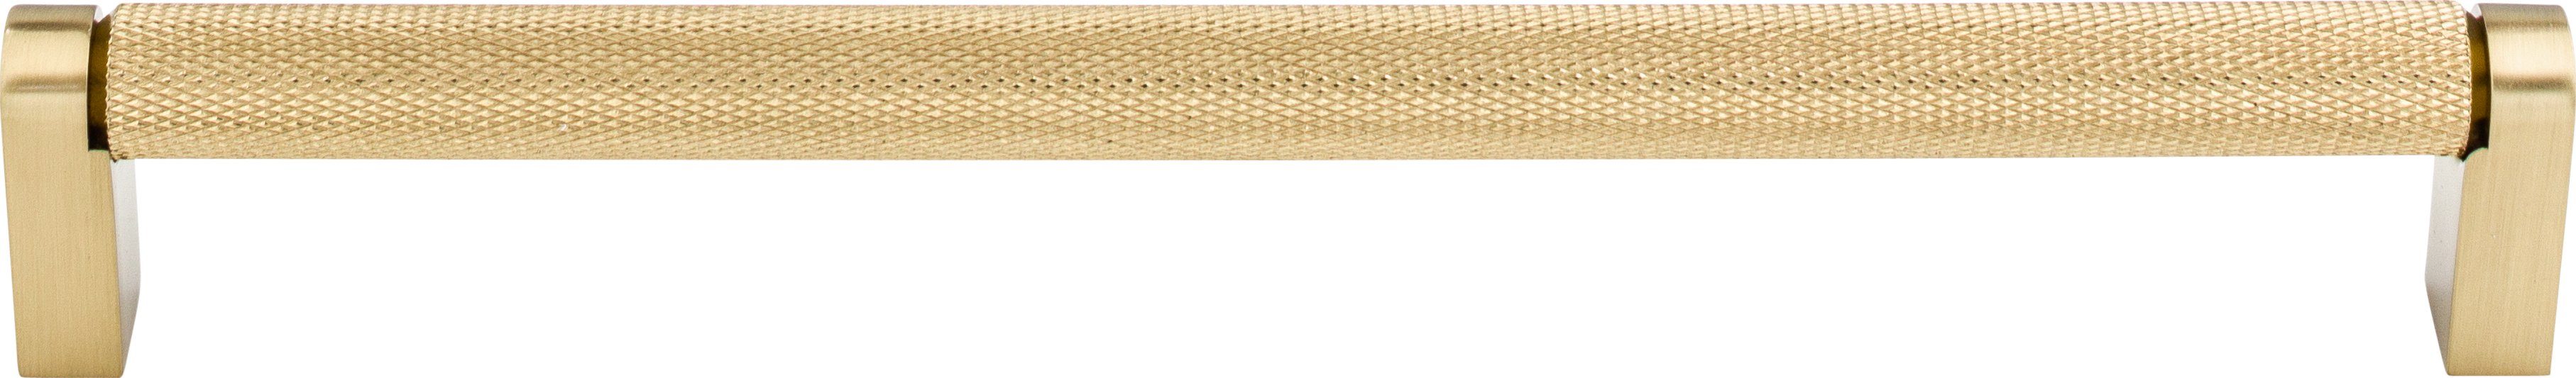 Top Knobs M2604 8-13/16in (224mm) Amwell Bar Pull Honey Bronze - KnobDepot